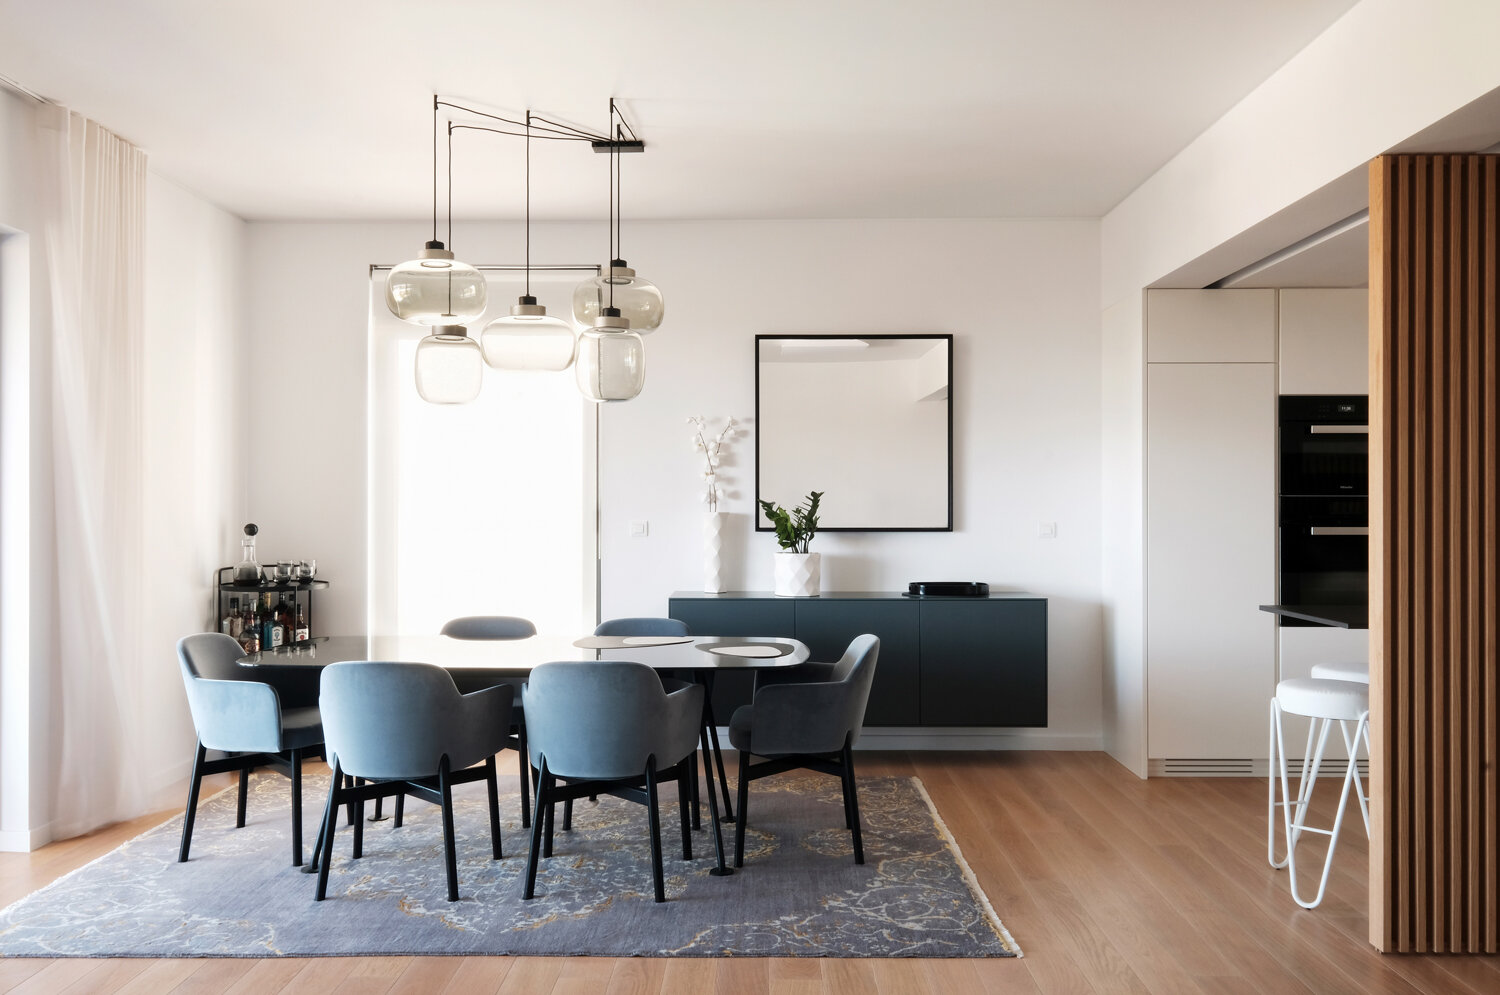  Apartment renovation in Hellinikon, Katerina Ralli interior designer 